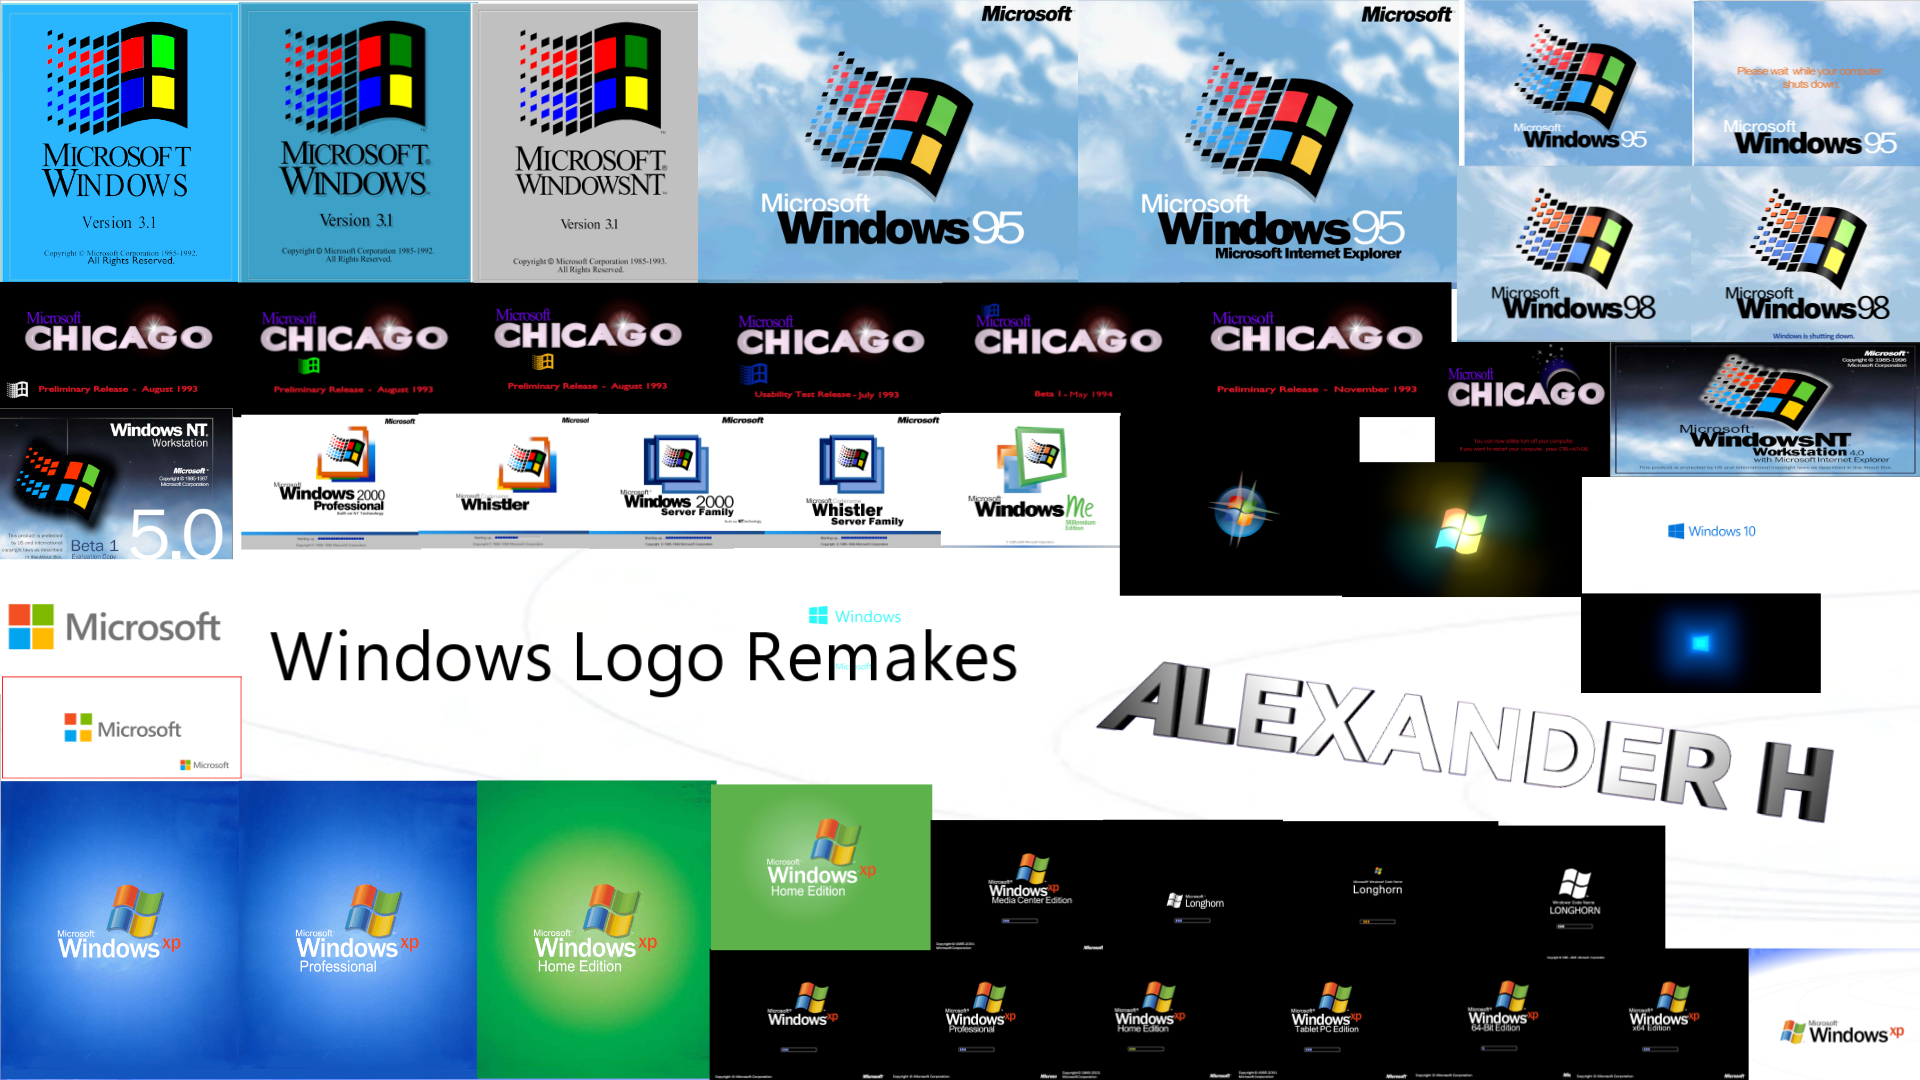 Windows Nt Logos